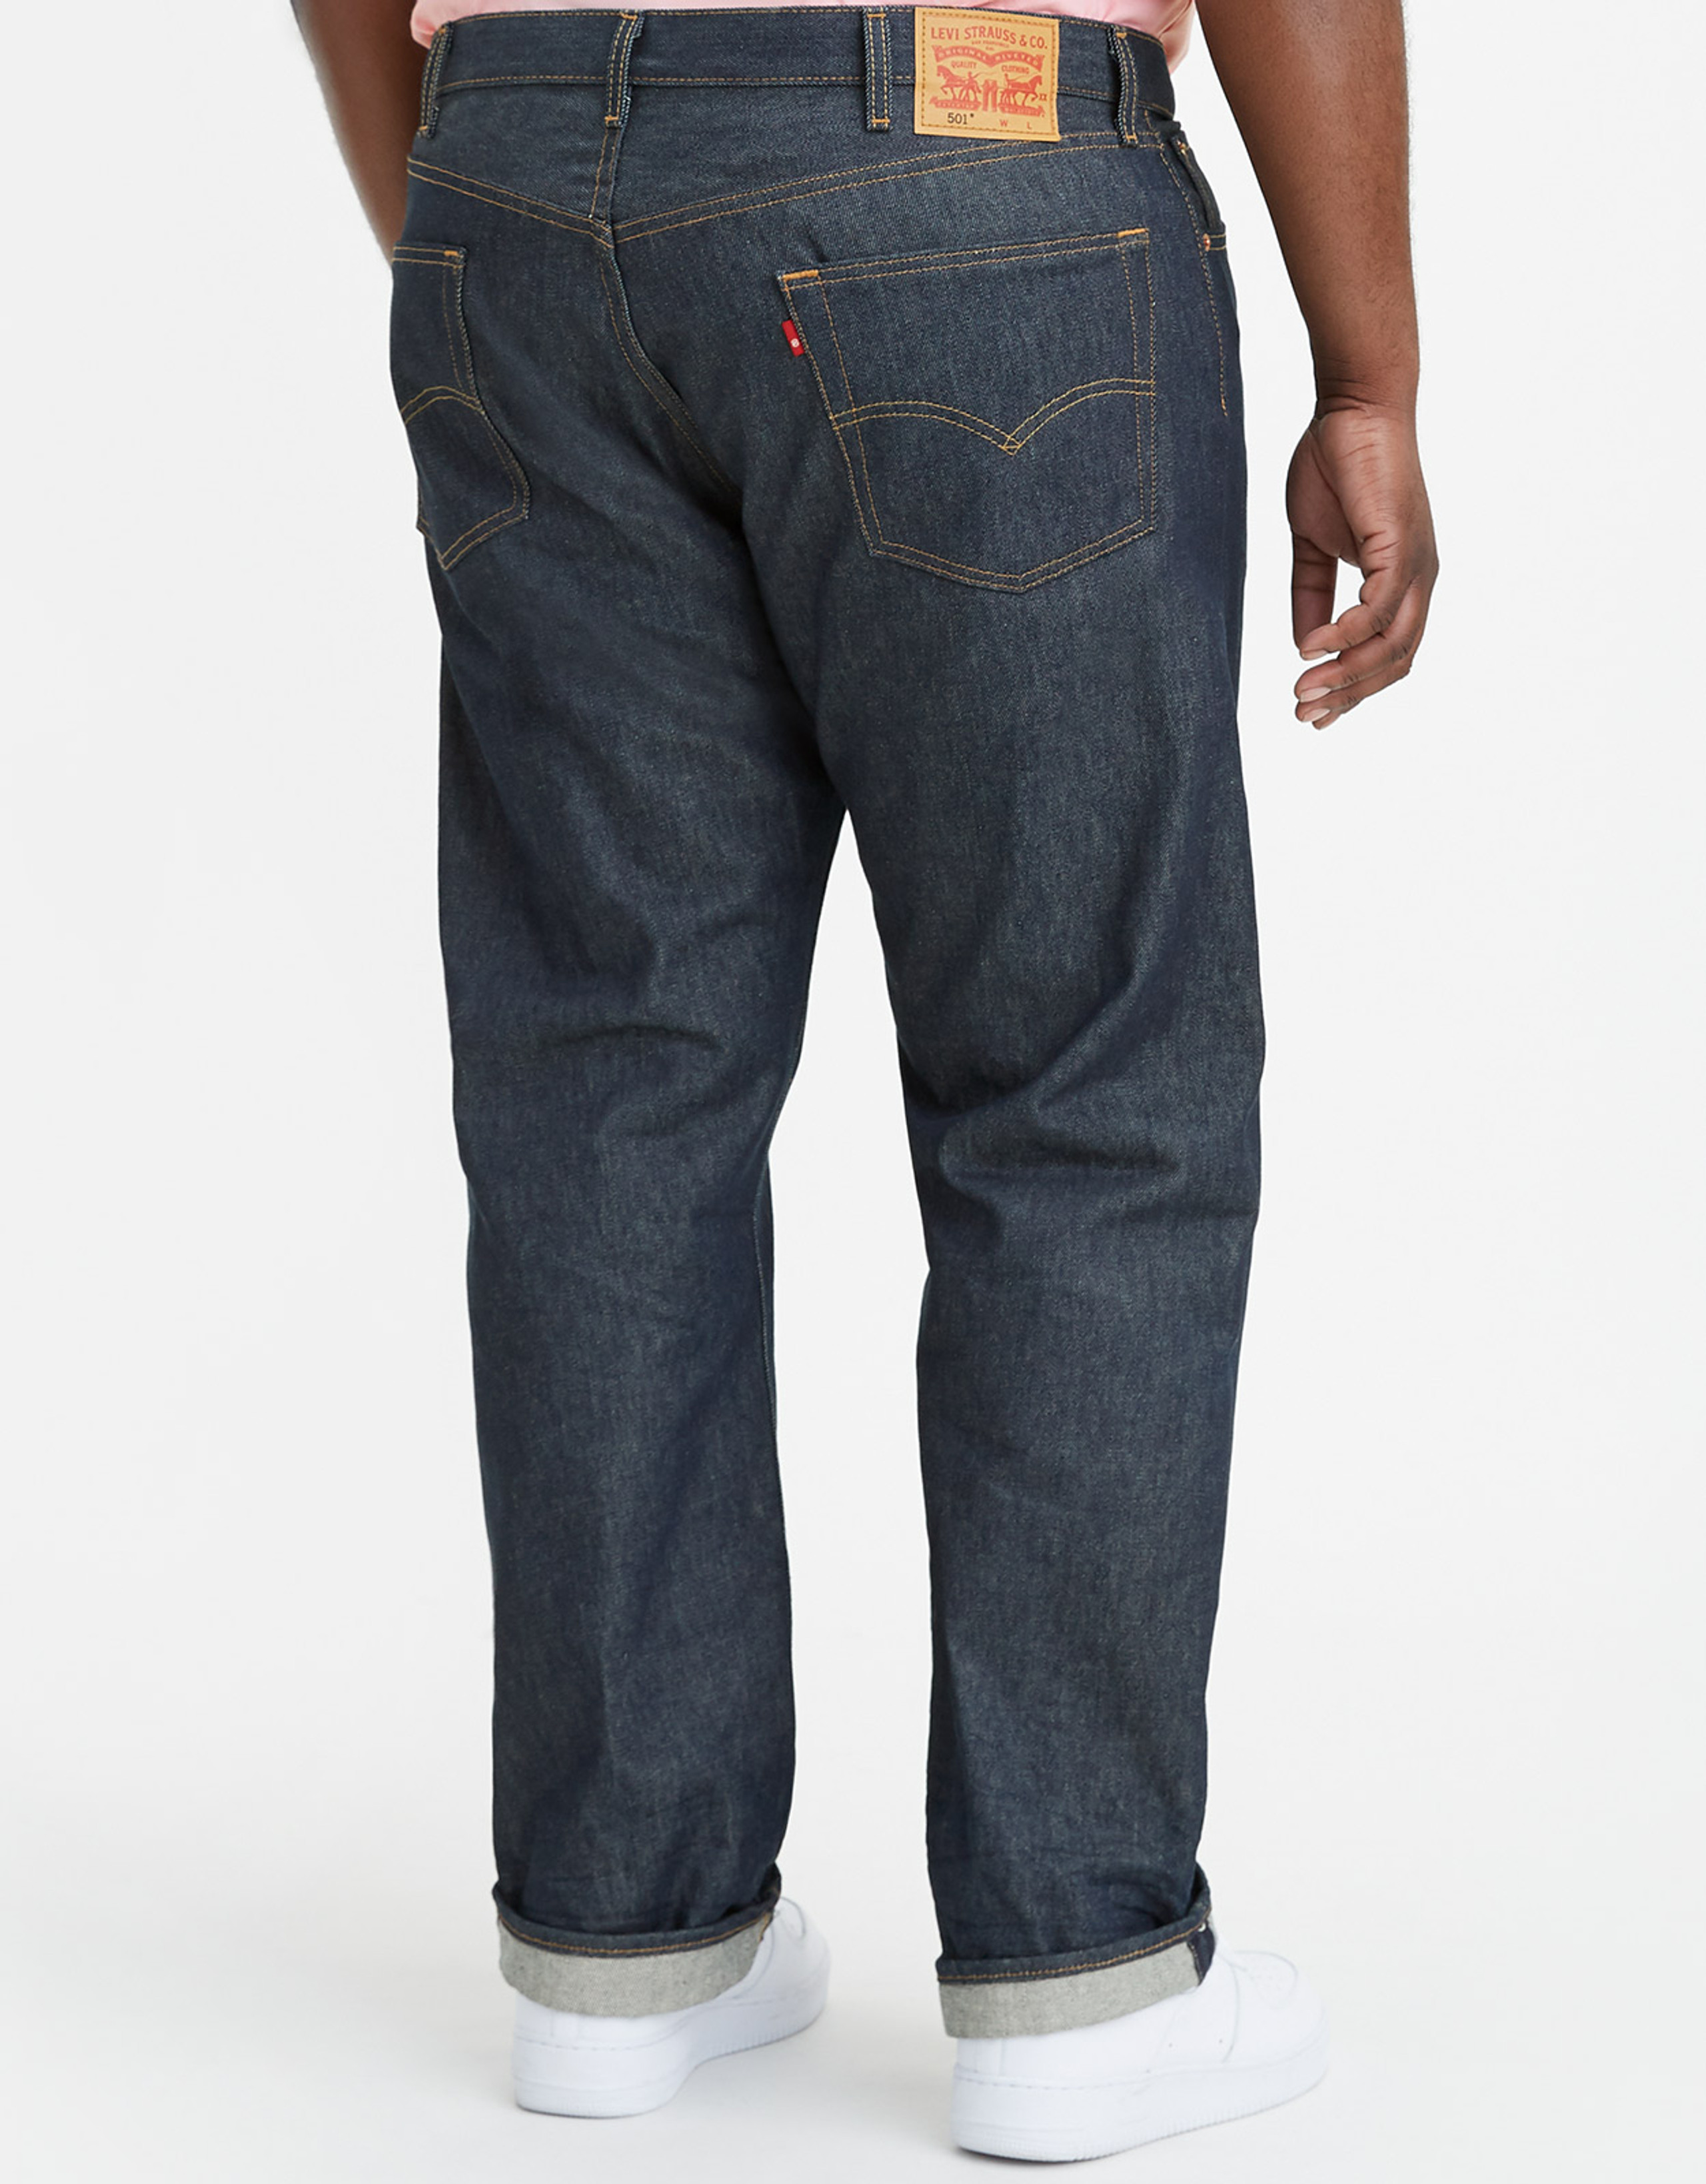 Levi's® 501® Original Regular Fit Straight Leg Jeans - Langston's